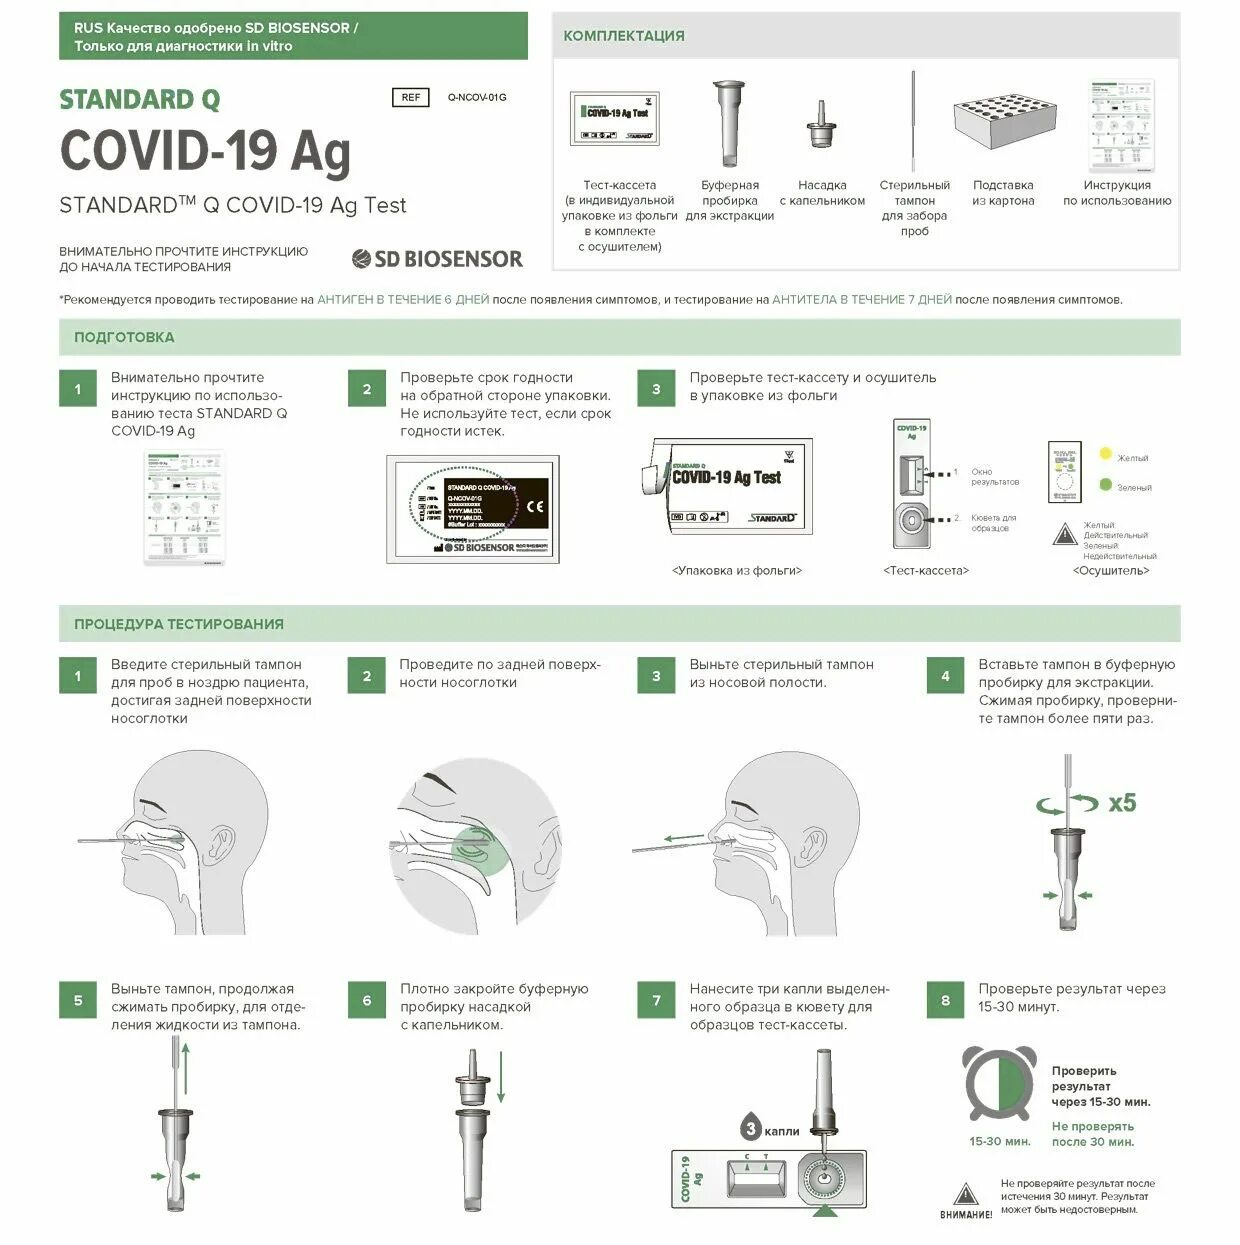 Результаты теста covid. Инструкция по экспресс тесту на ковид Covid-19. Тест на ковид Covid-19 AG инструкция. Показания экспресс теста на ковид19. Экспресс-тест на коронавирус Covid-19.